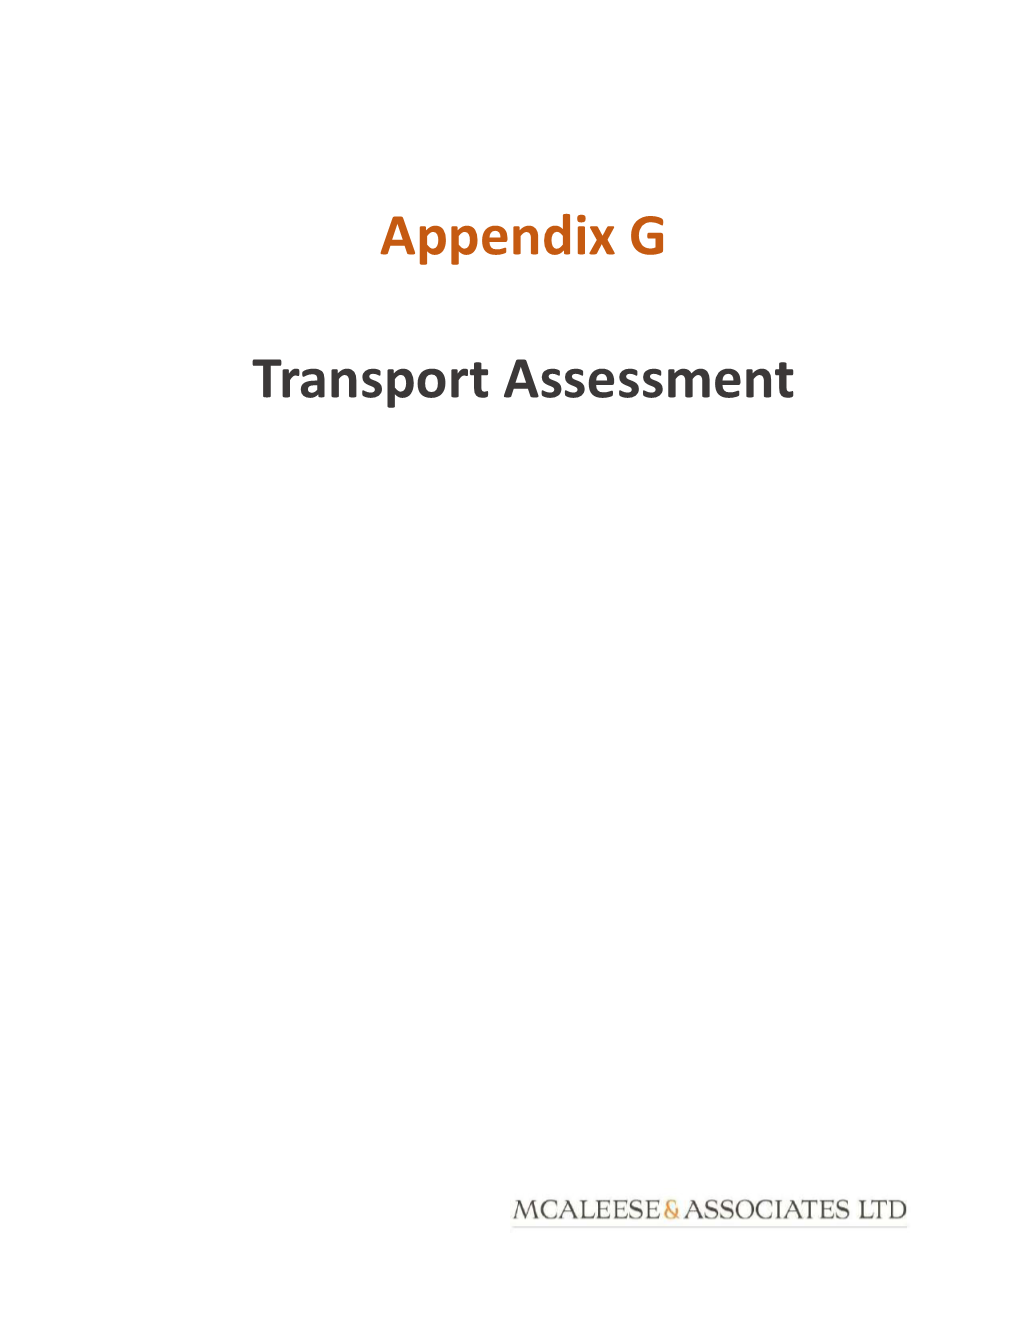 Appendix G Transport Assessment